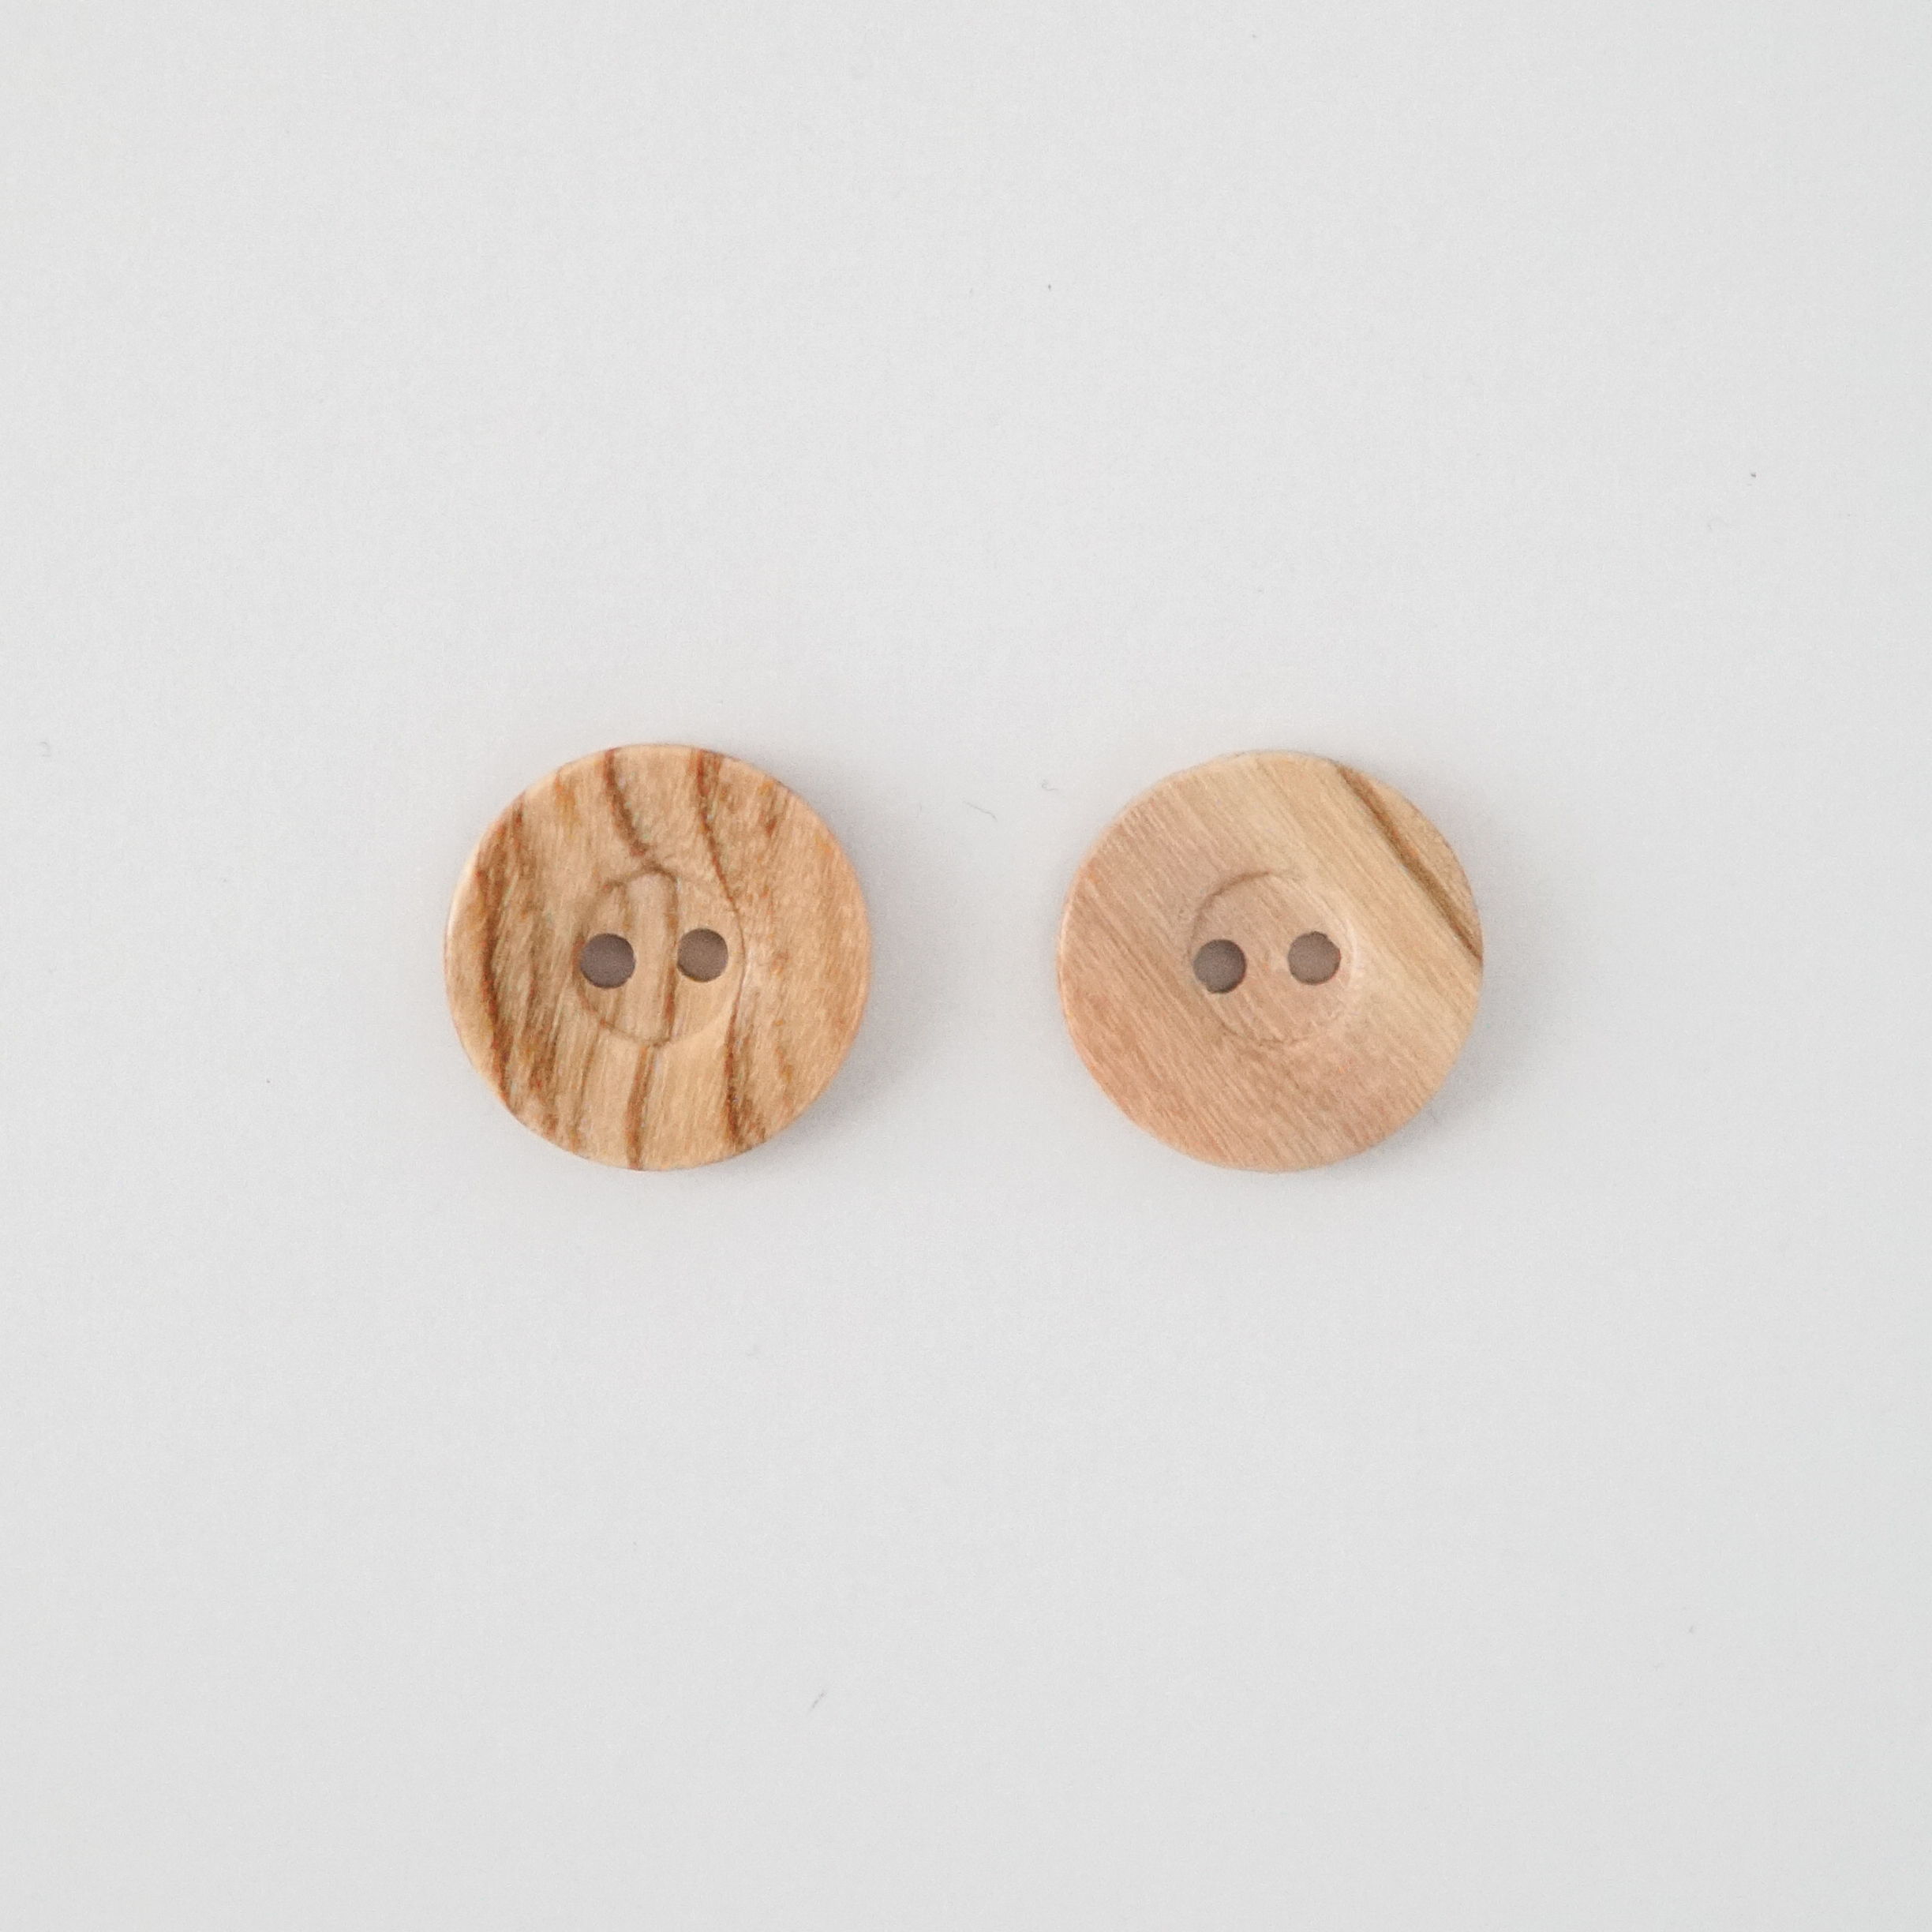 treknapper til barn - Wooden button | Small wood button | knitting - by HipKnitShop - 30/10/2018